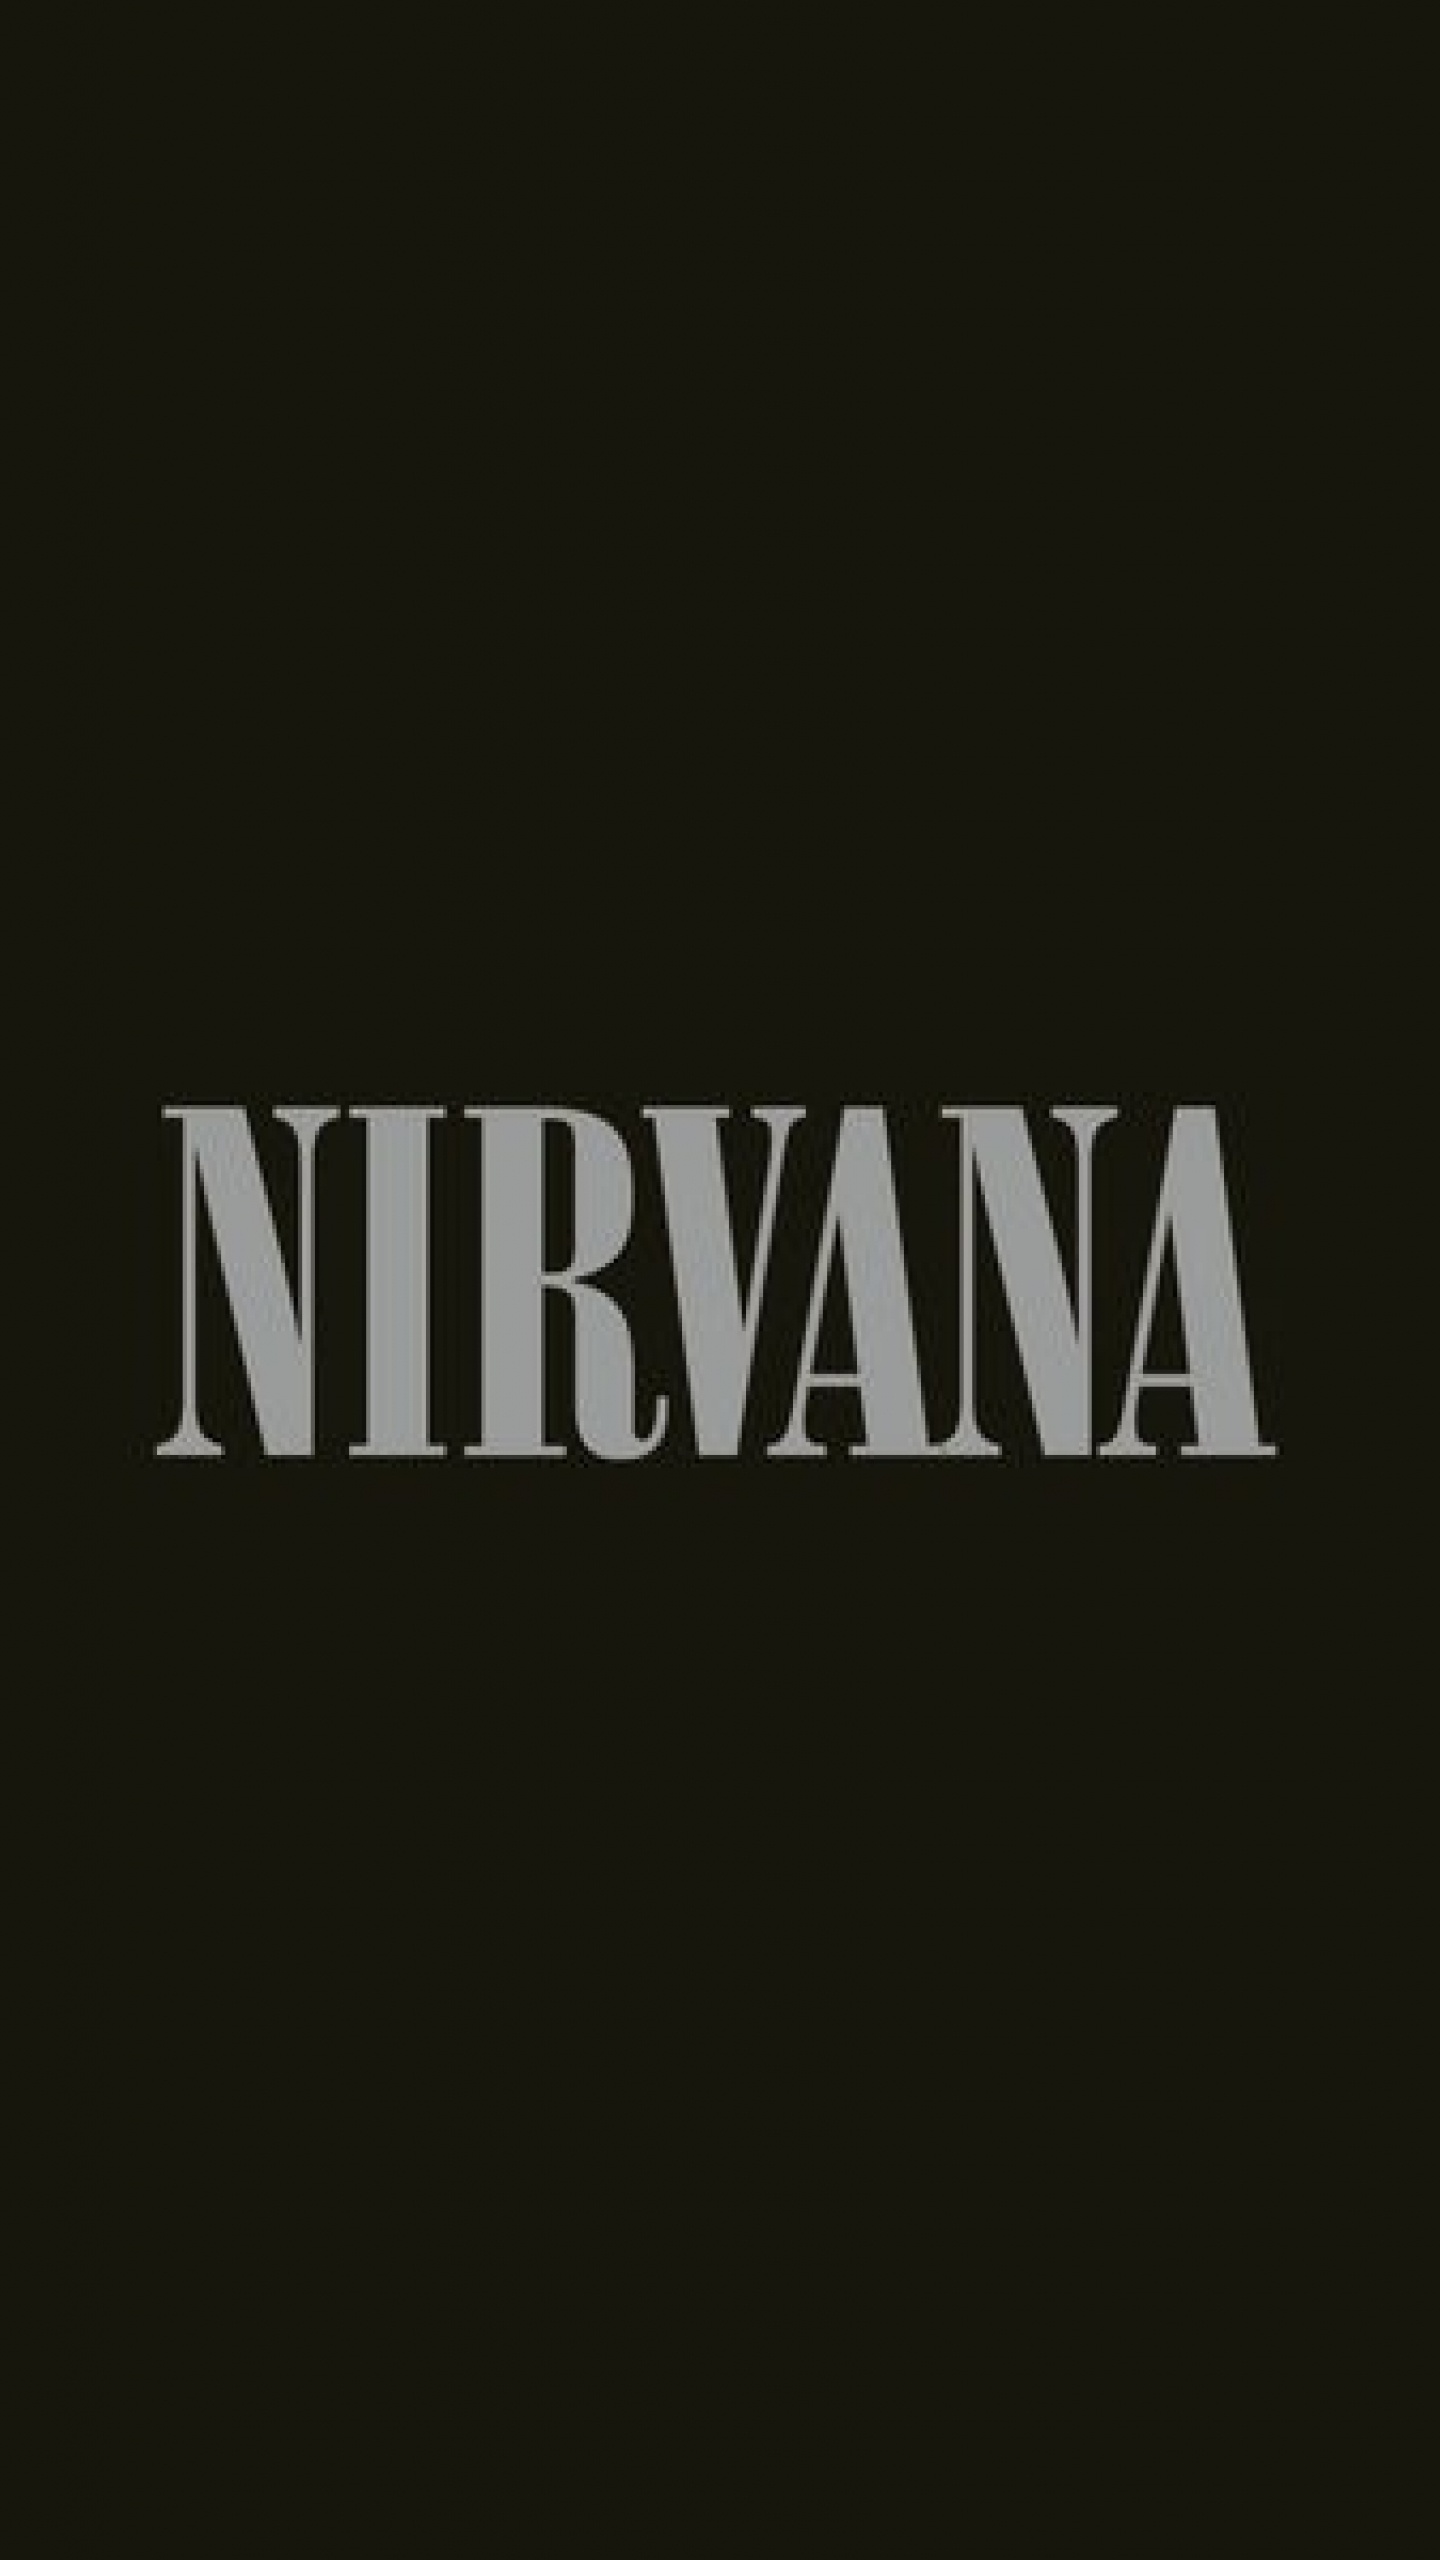 Nirvana, Album, Graphic Design, Text, Black. Wallpaper in 1440x2560 Resolution